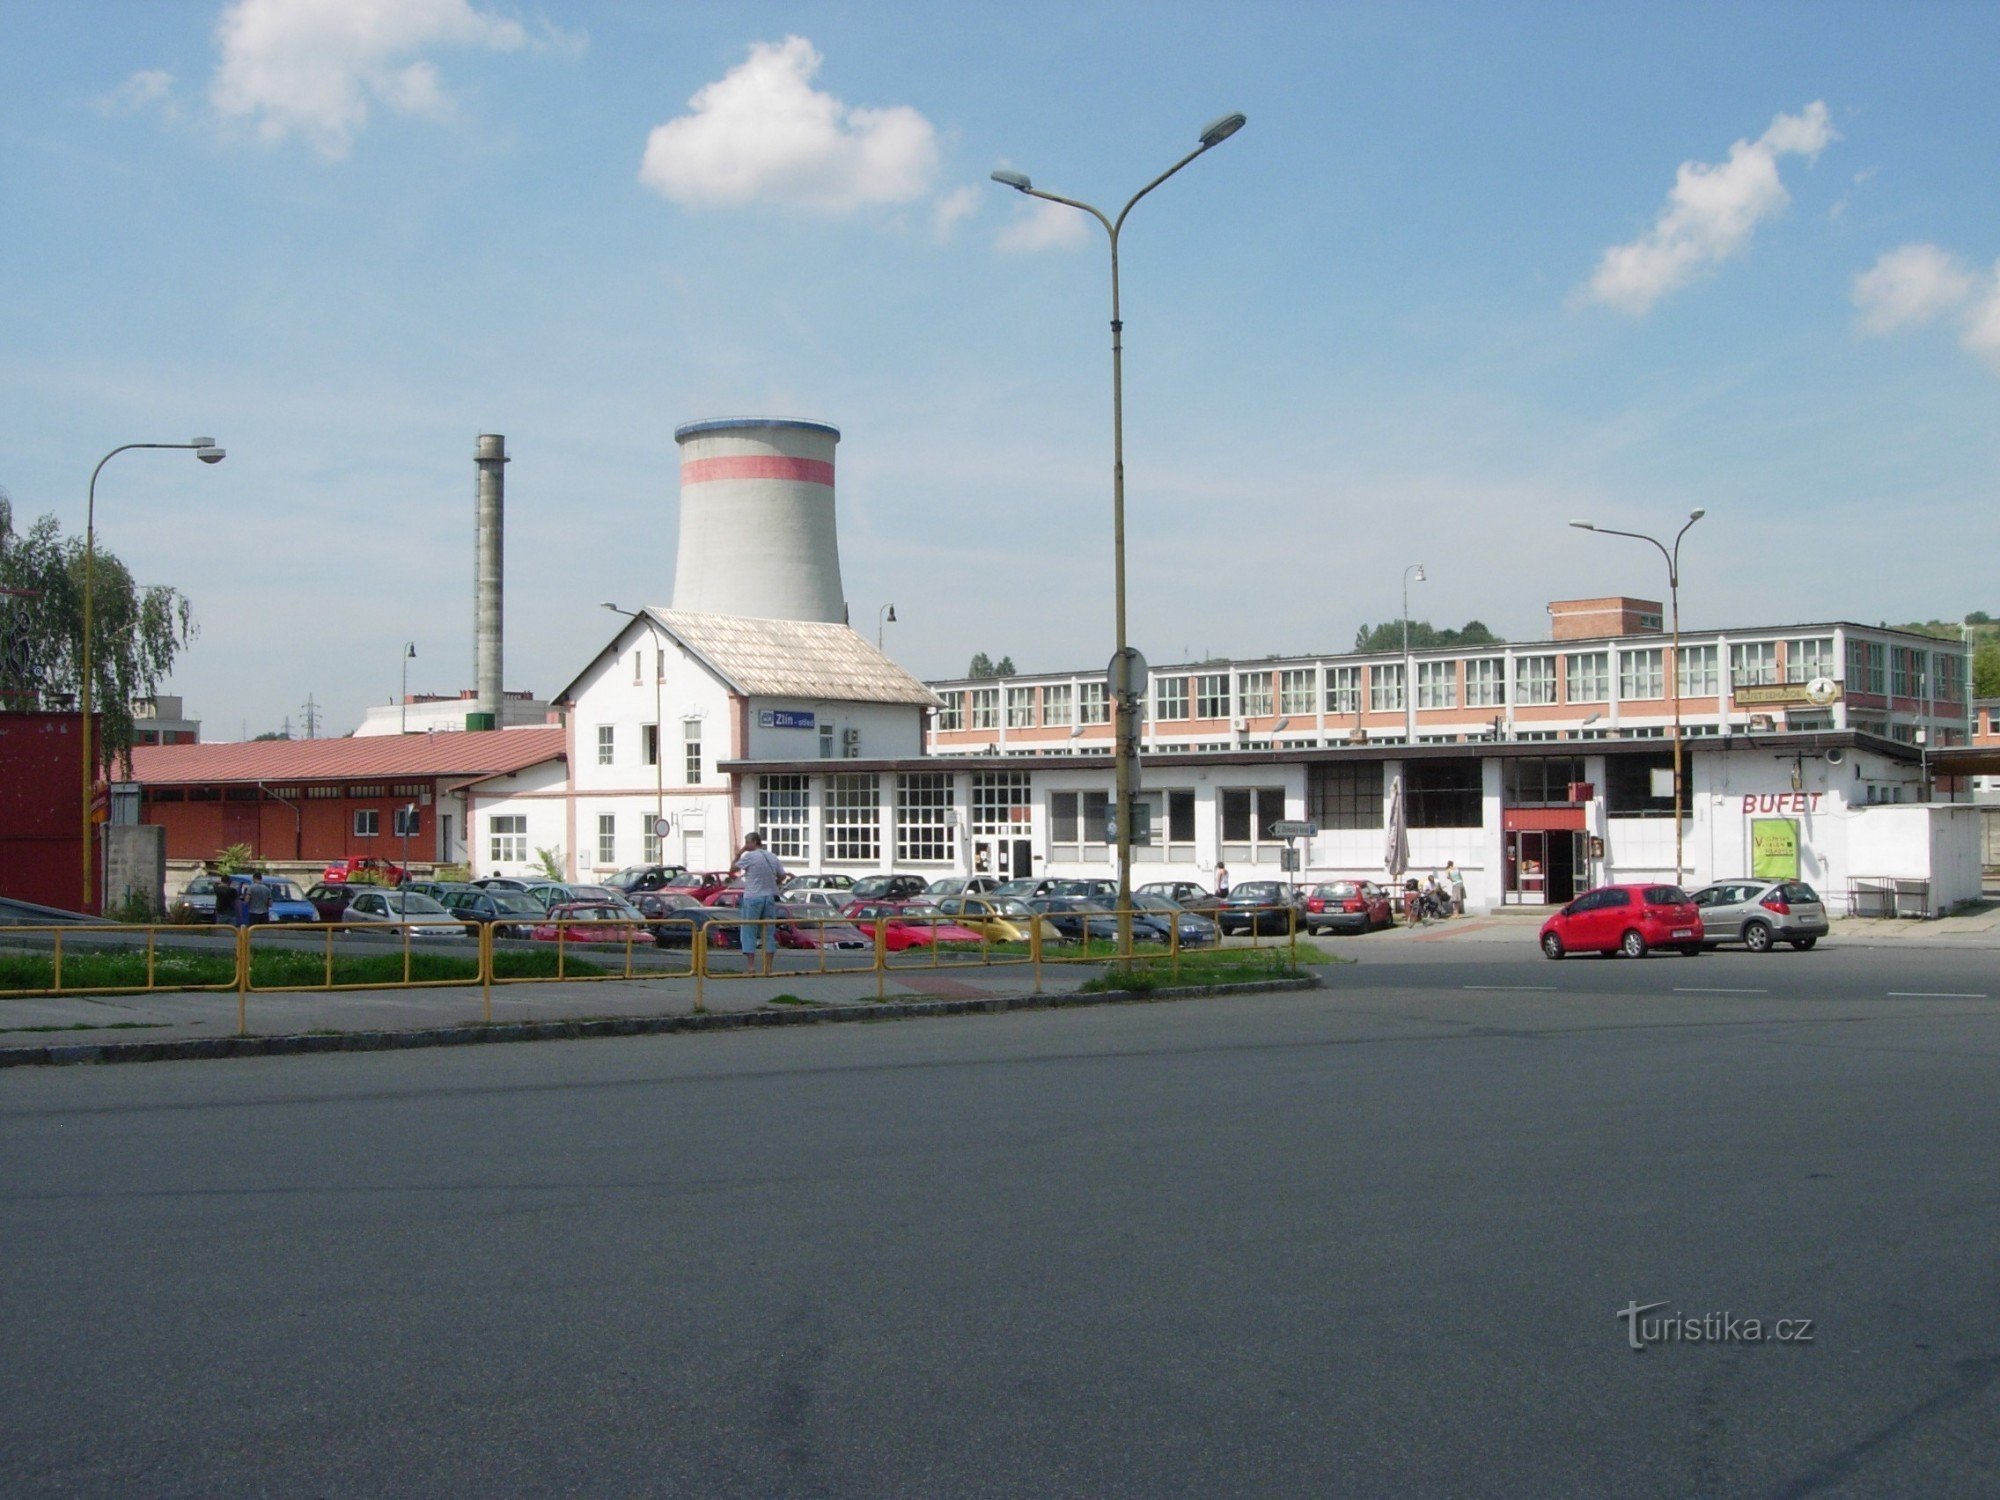 Das "Story"-Story-Gebäude von ČD Zlín